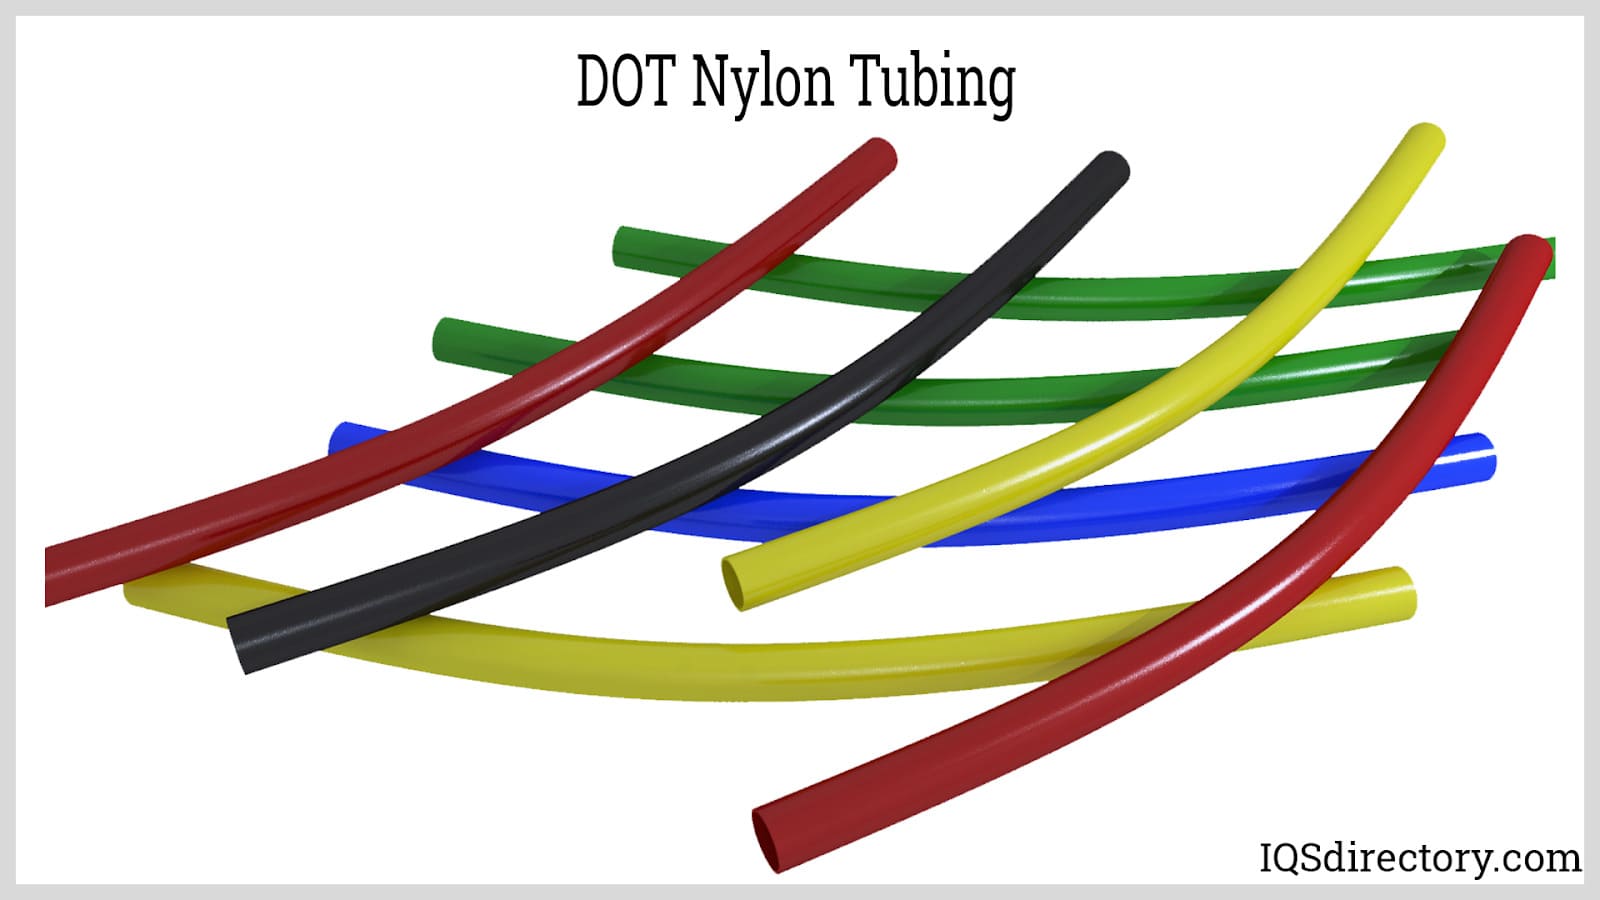 DOT Nylon Tubing